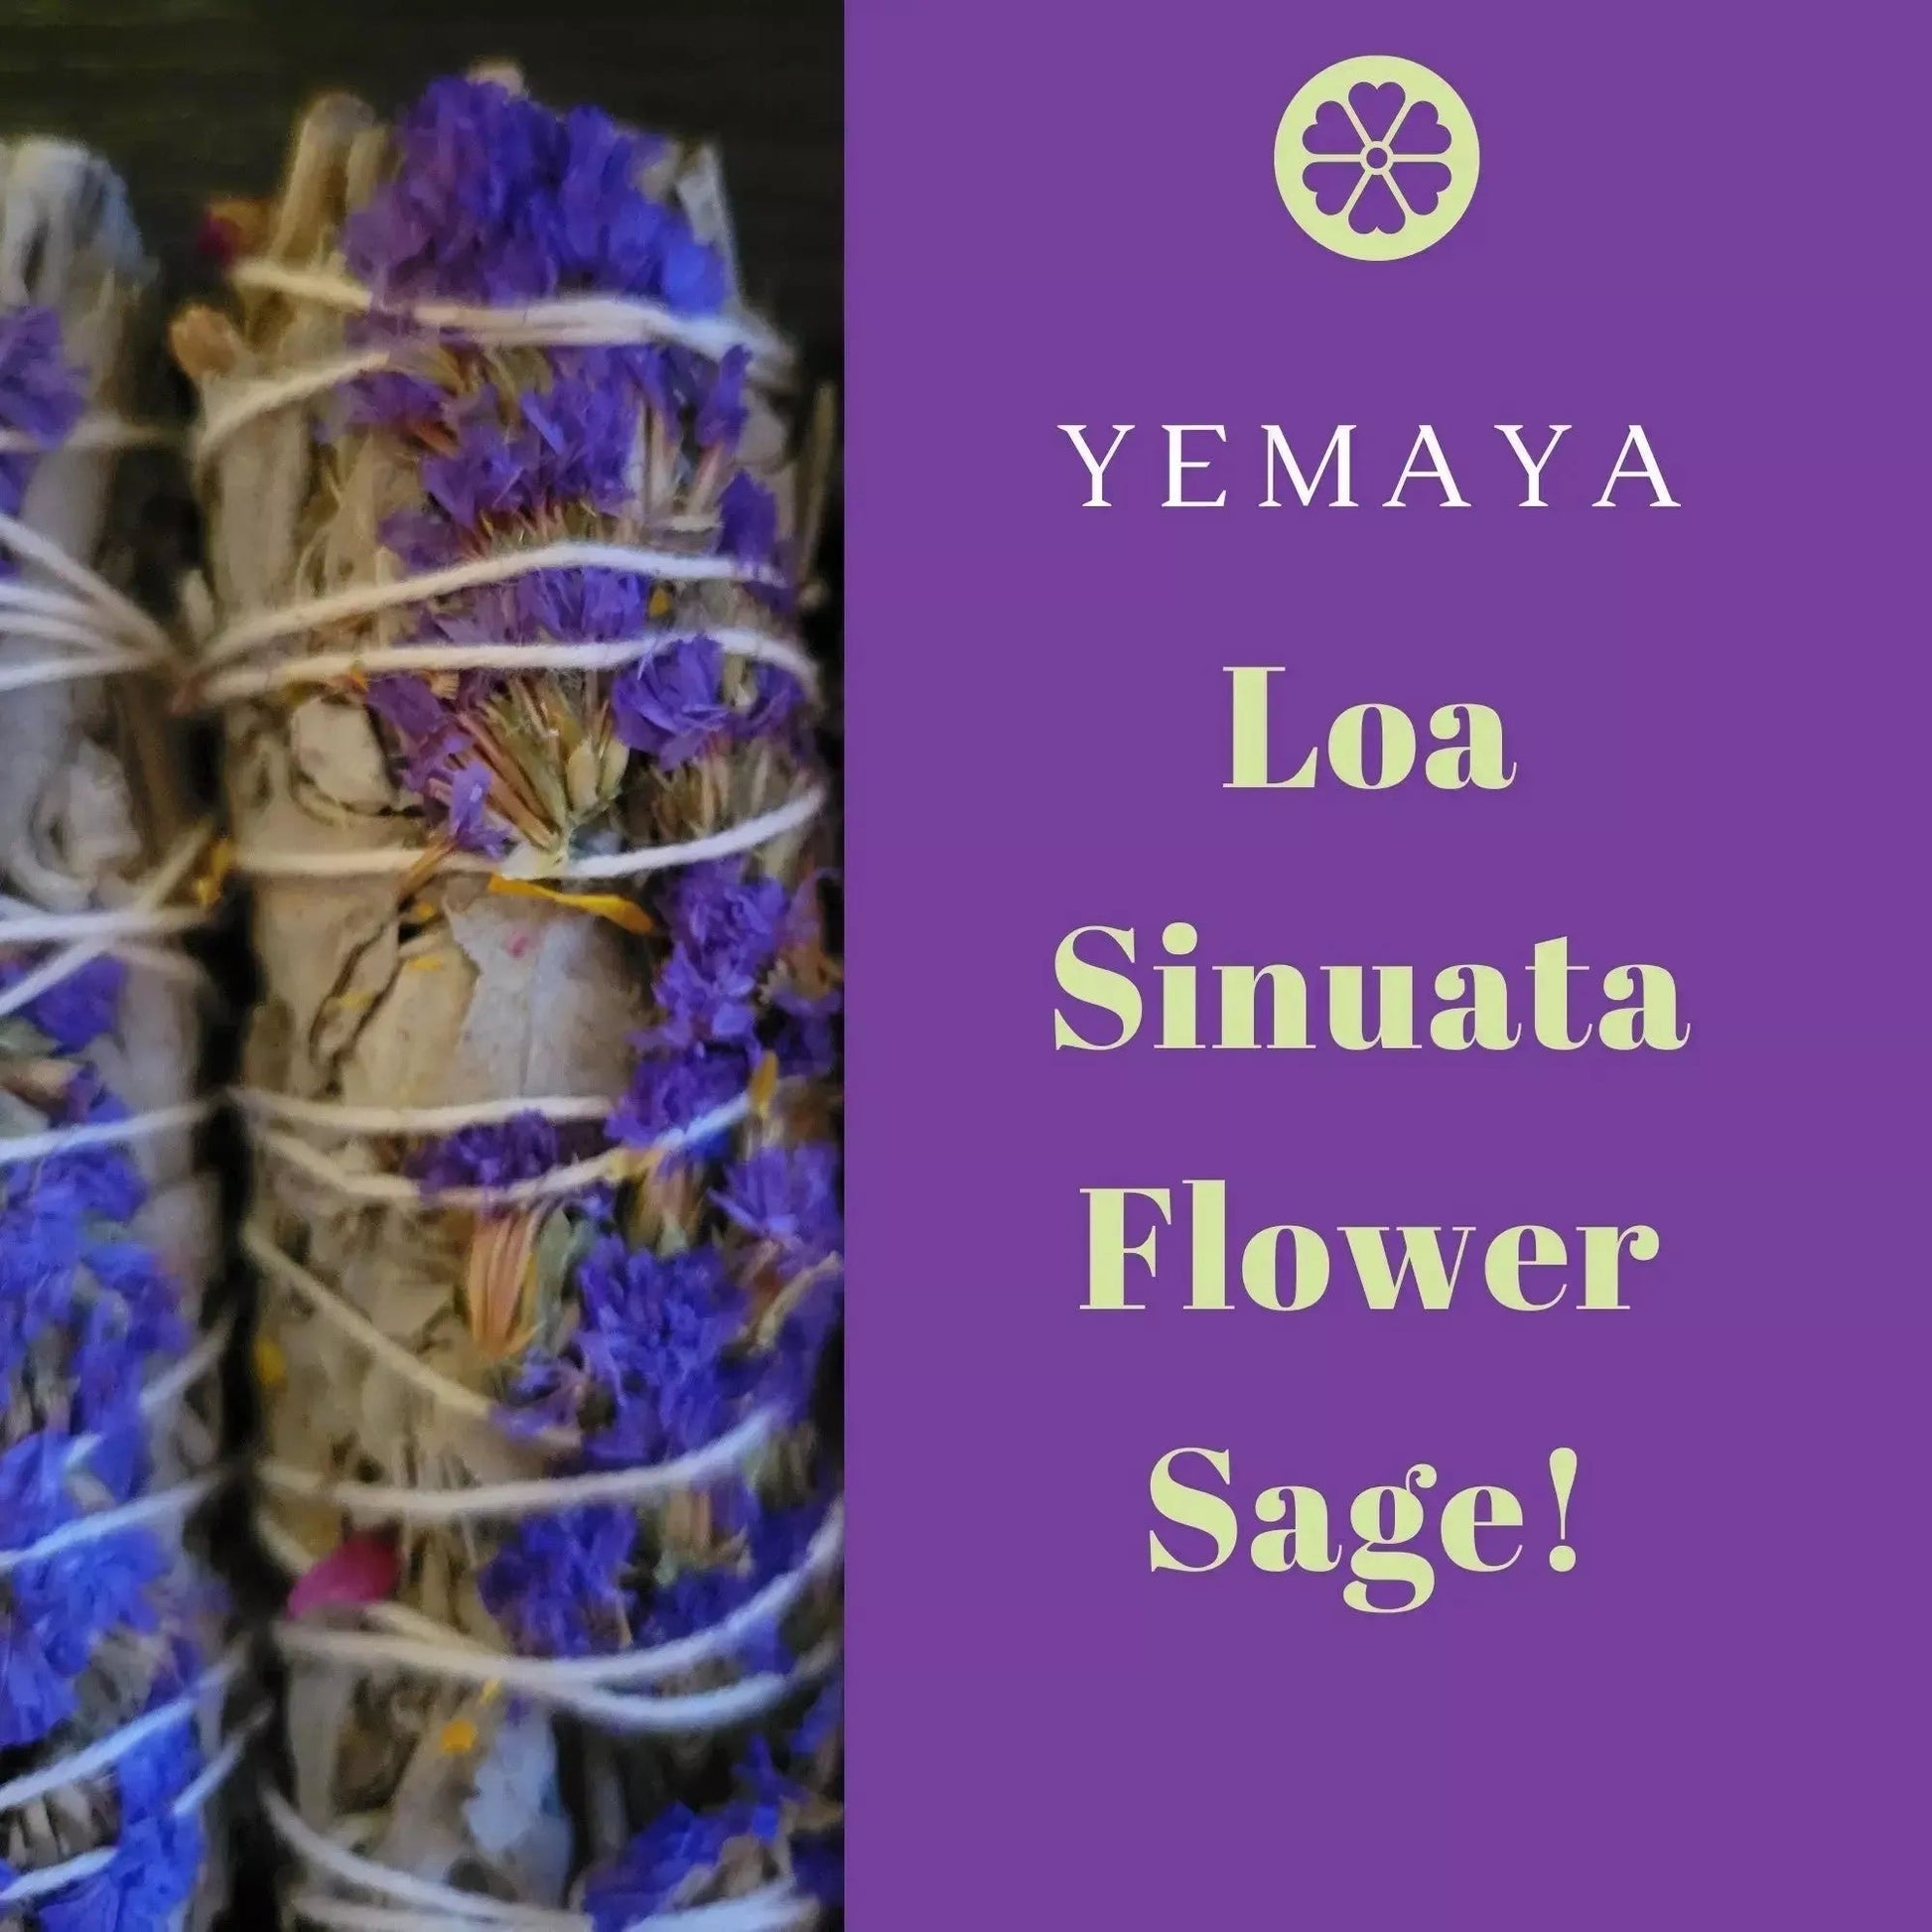 Yemaya Loa Sinuata Flower Sage - Godiva Oya Bey